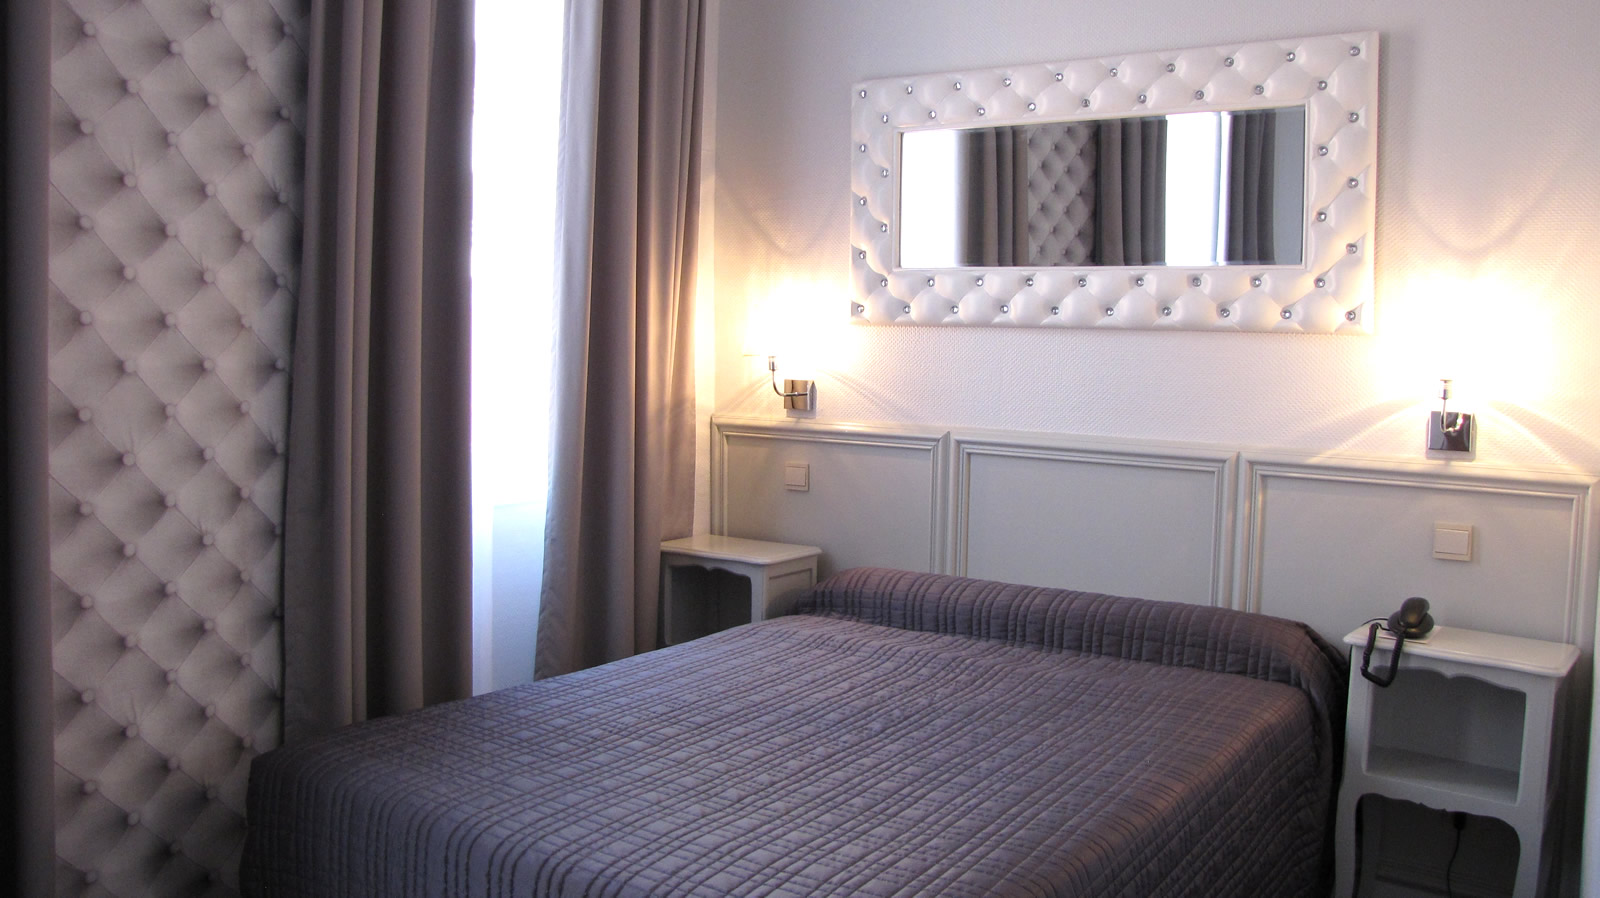 Hotel de France - Hotel de France